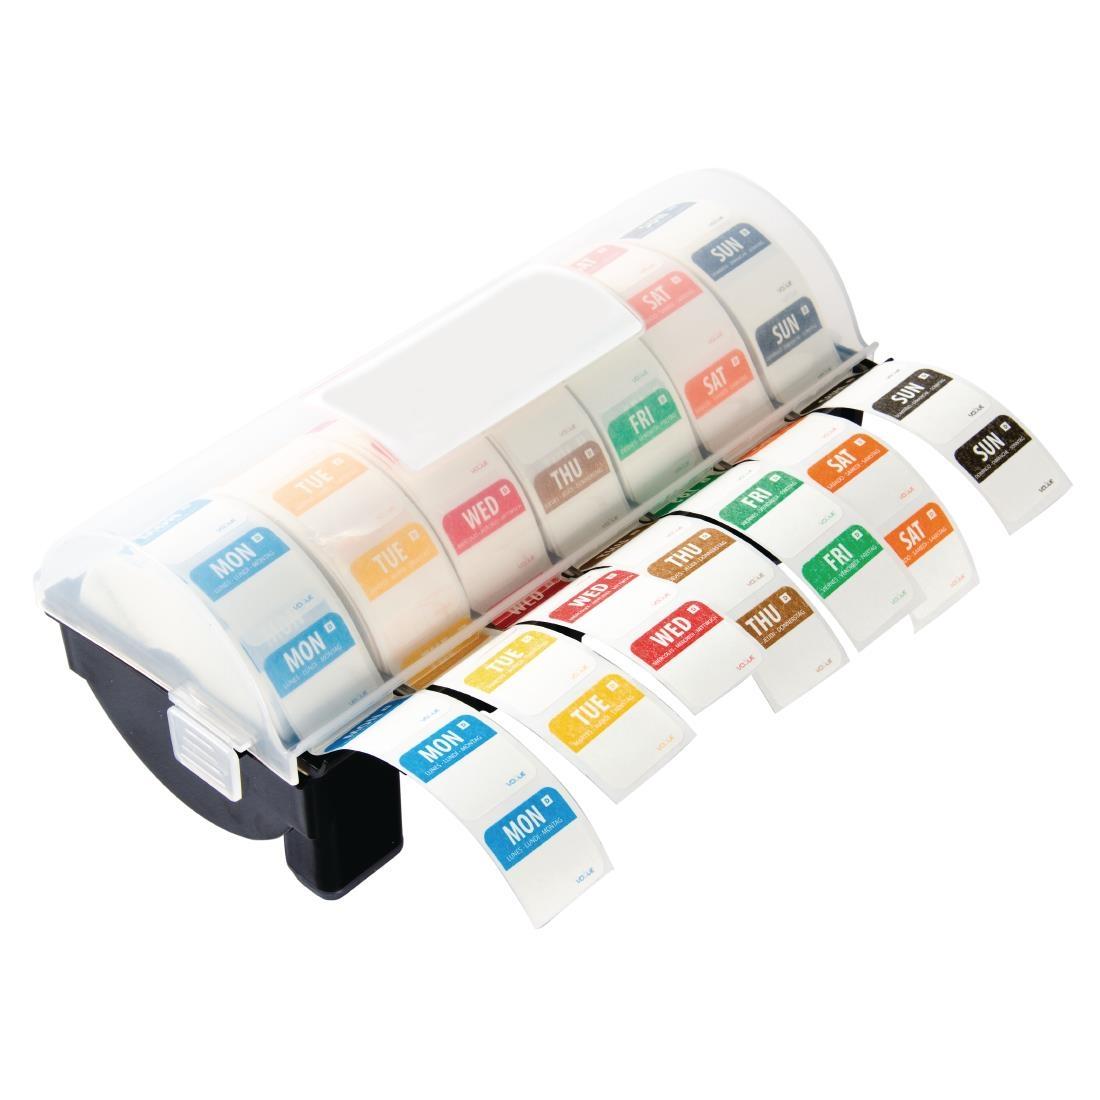 Dissolvable Colour Coded Food Label Starter kit with 1" Dispenser - GH474  - 2